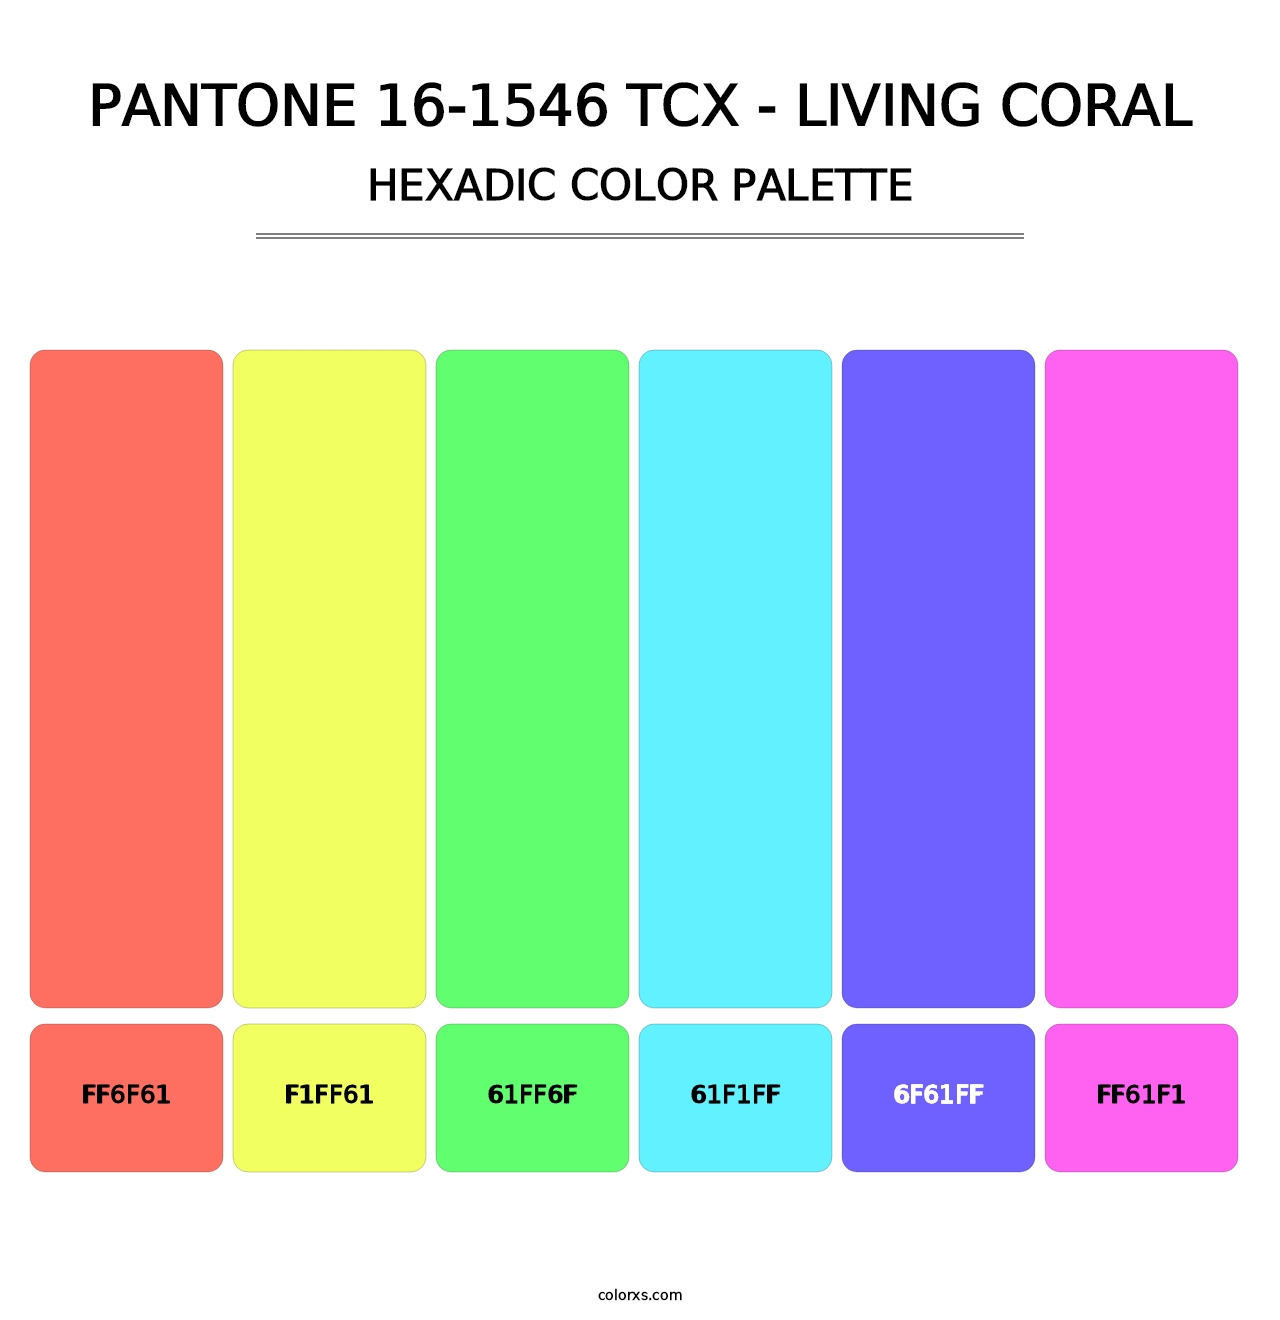 PANTONE 16-1546 TCX - Living Coral - Hexadic Color Palette